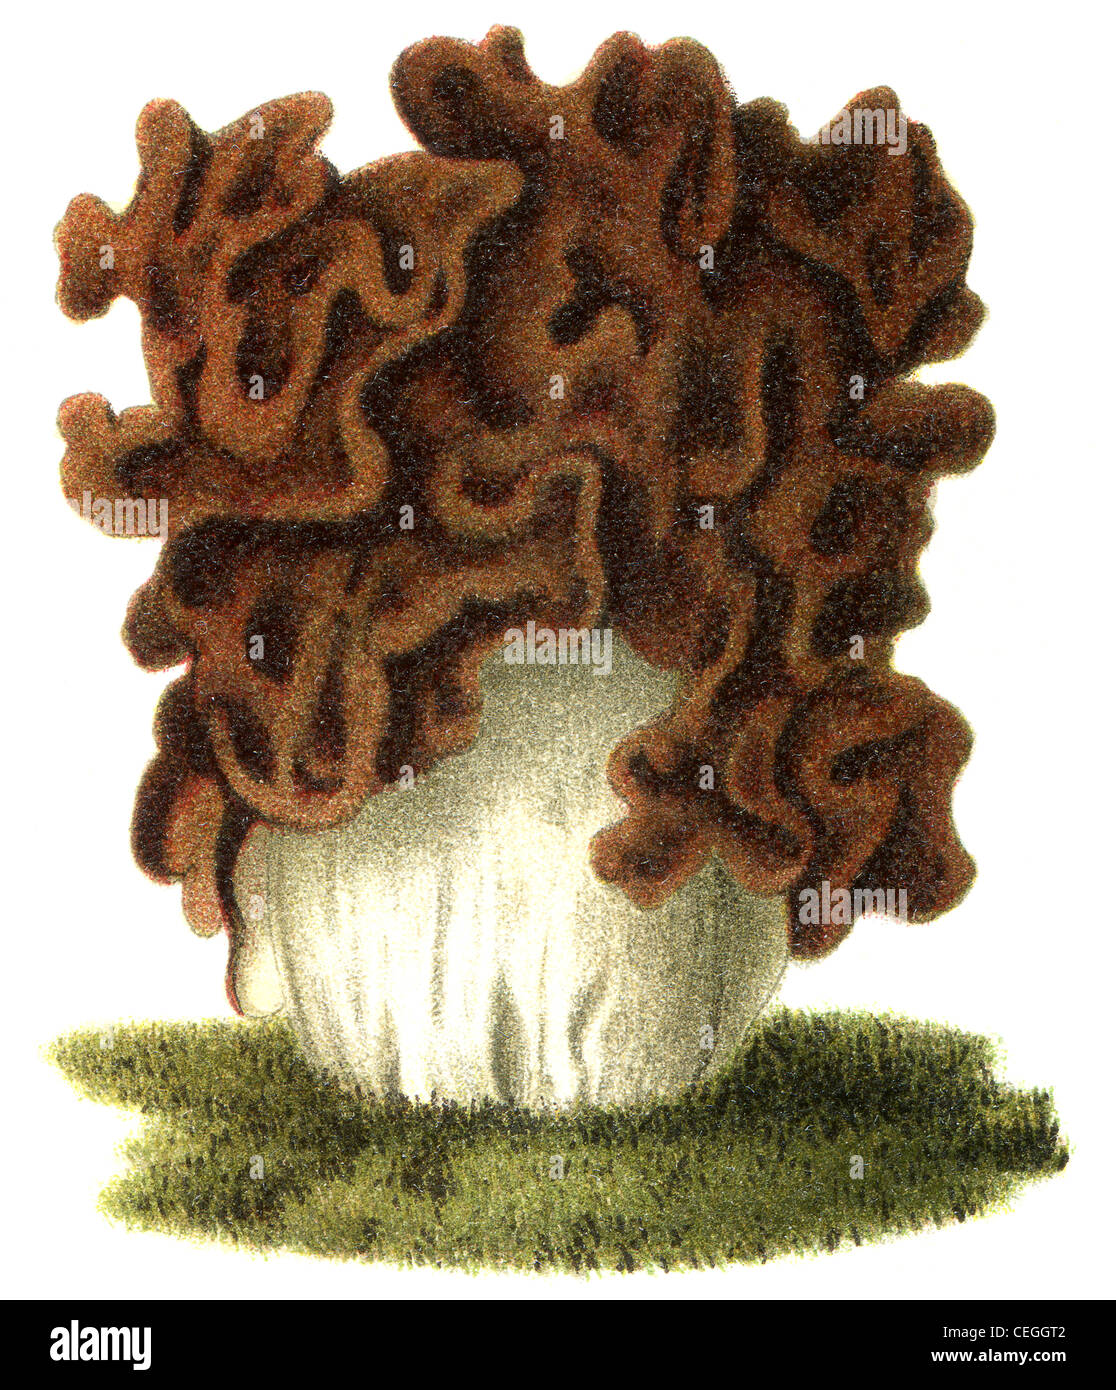 Edible fungus Gyromitra esculenta. Publication of the book 'Meyers Konversations-Lexikon', Volume 7, Leipzig, Germany, 1910 Stock Photo